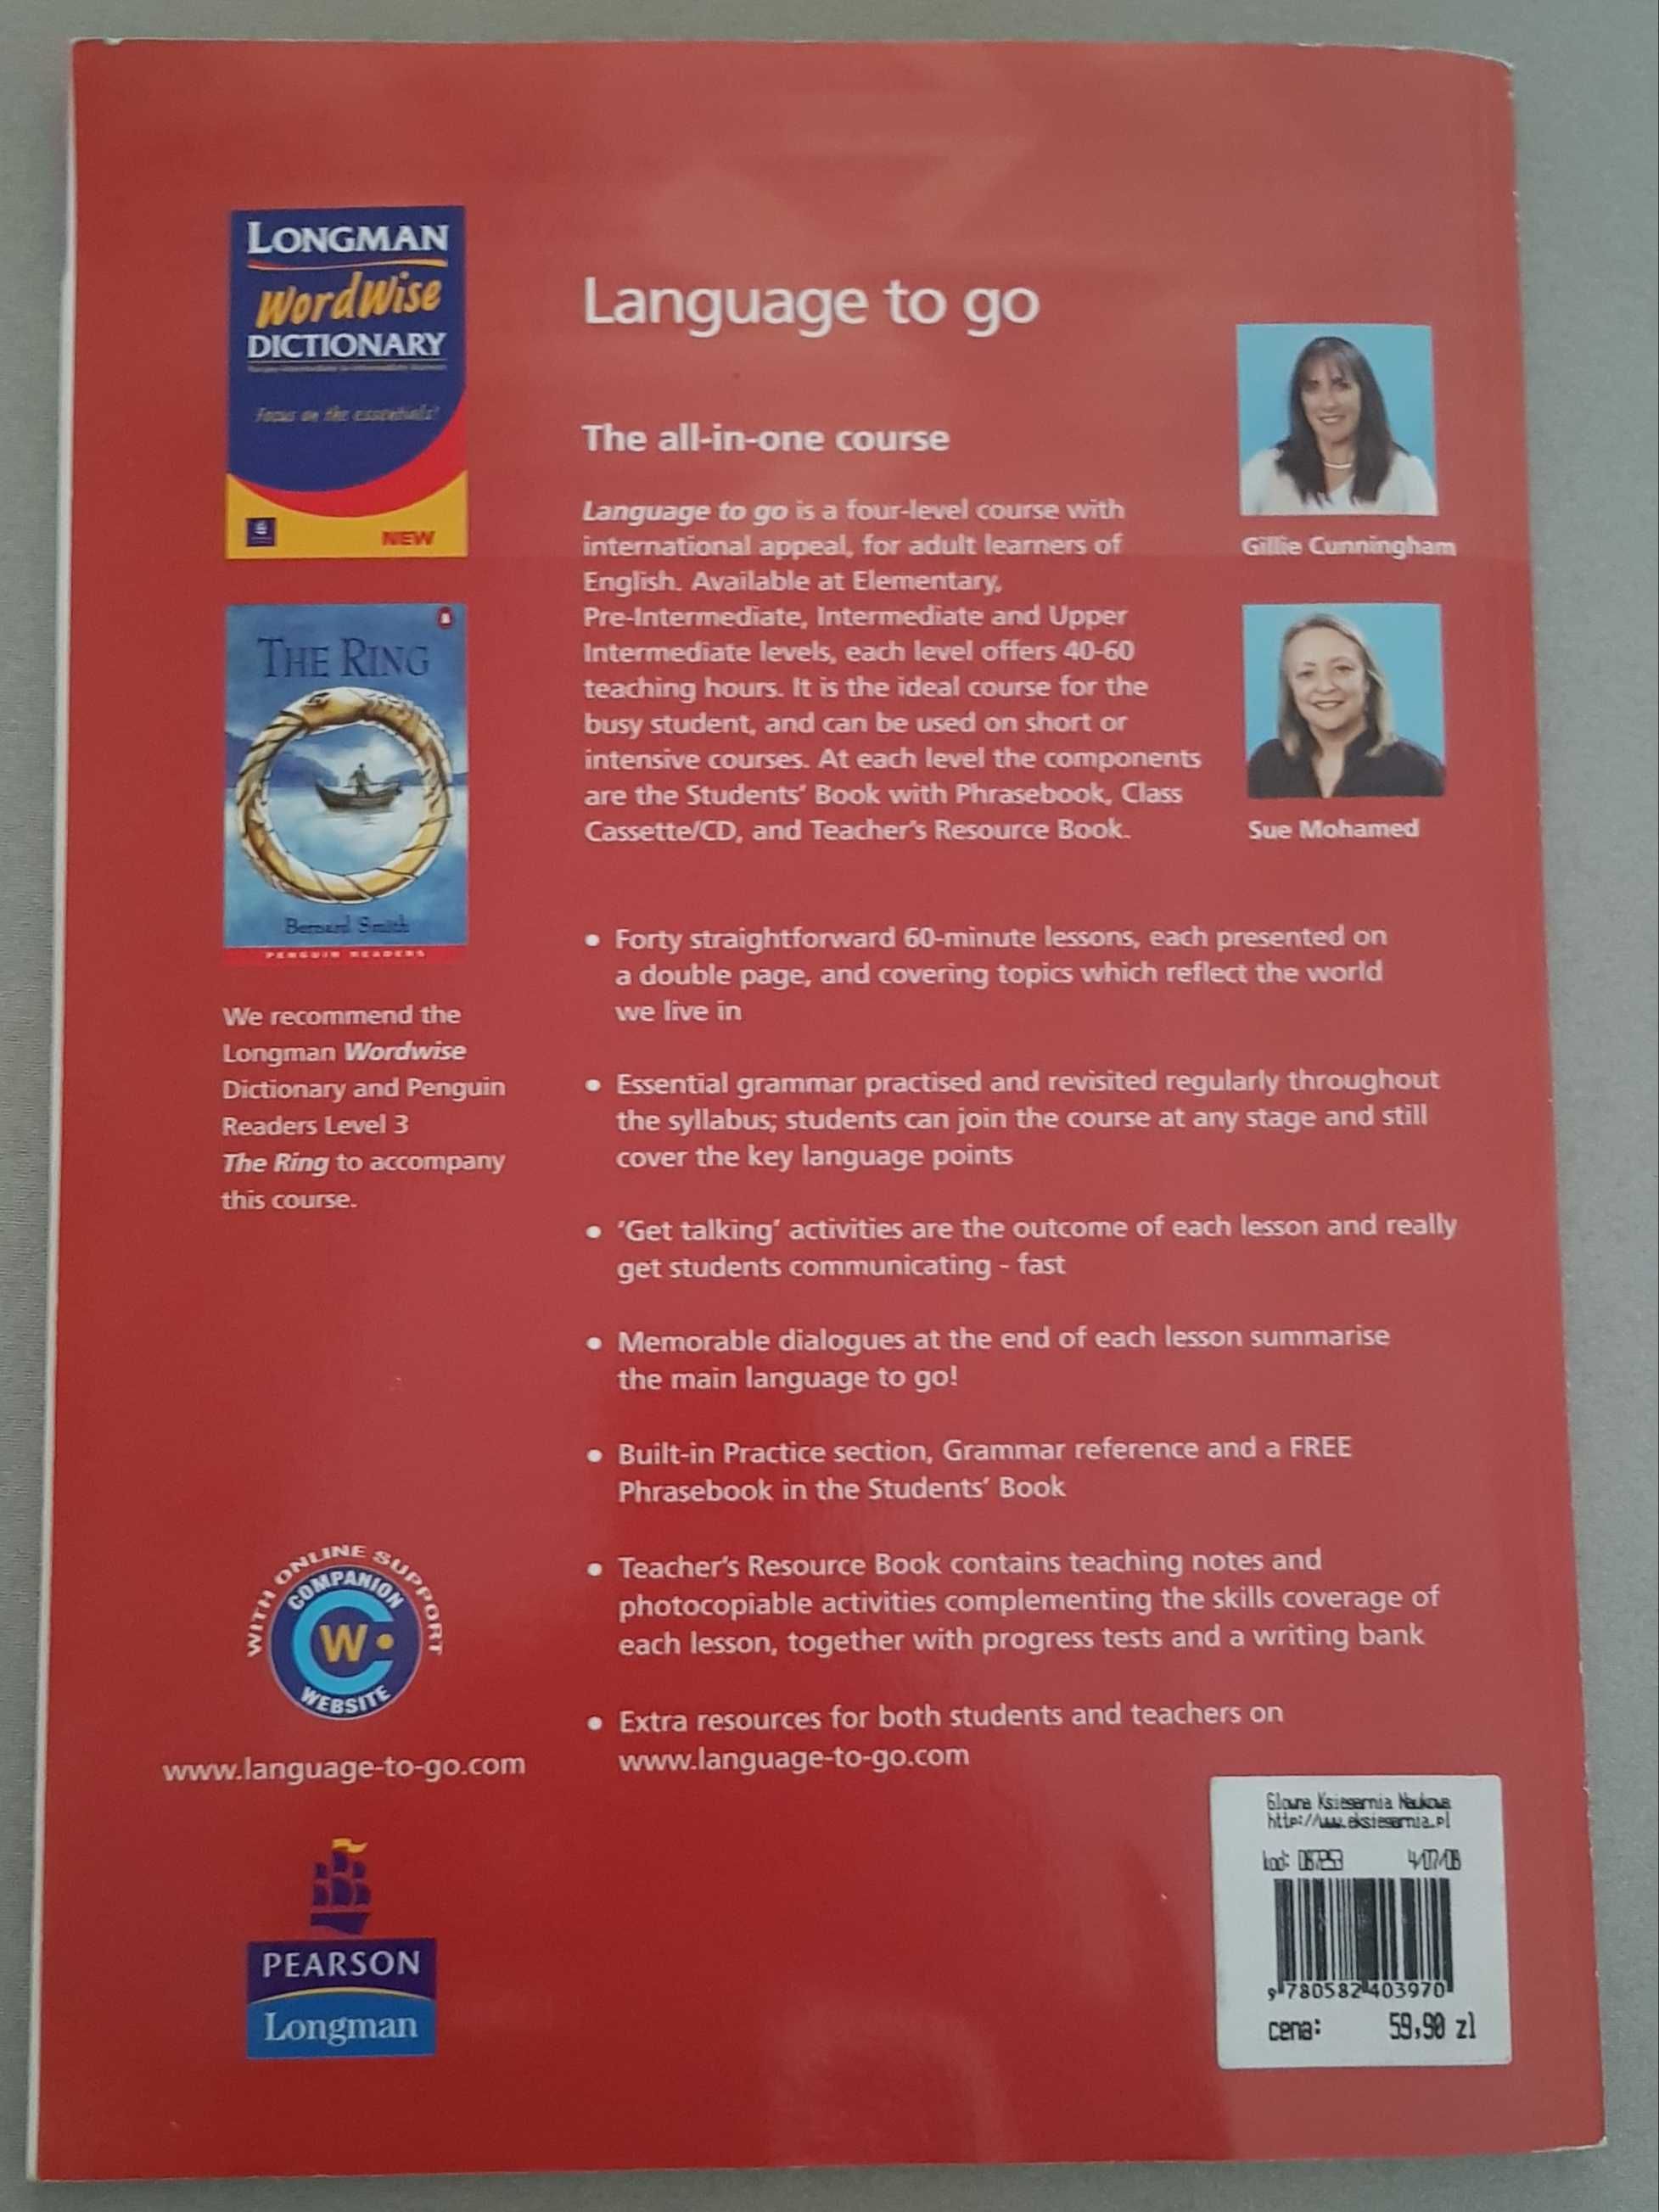 Language to go Pre-Intermediate Students' Book